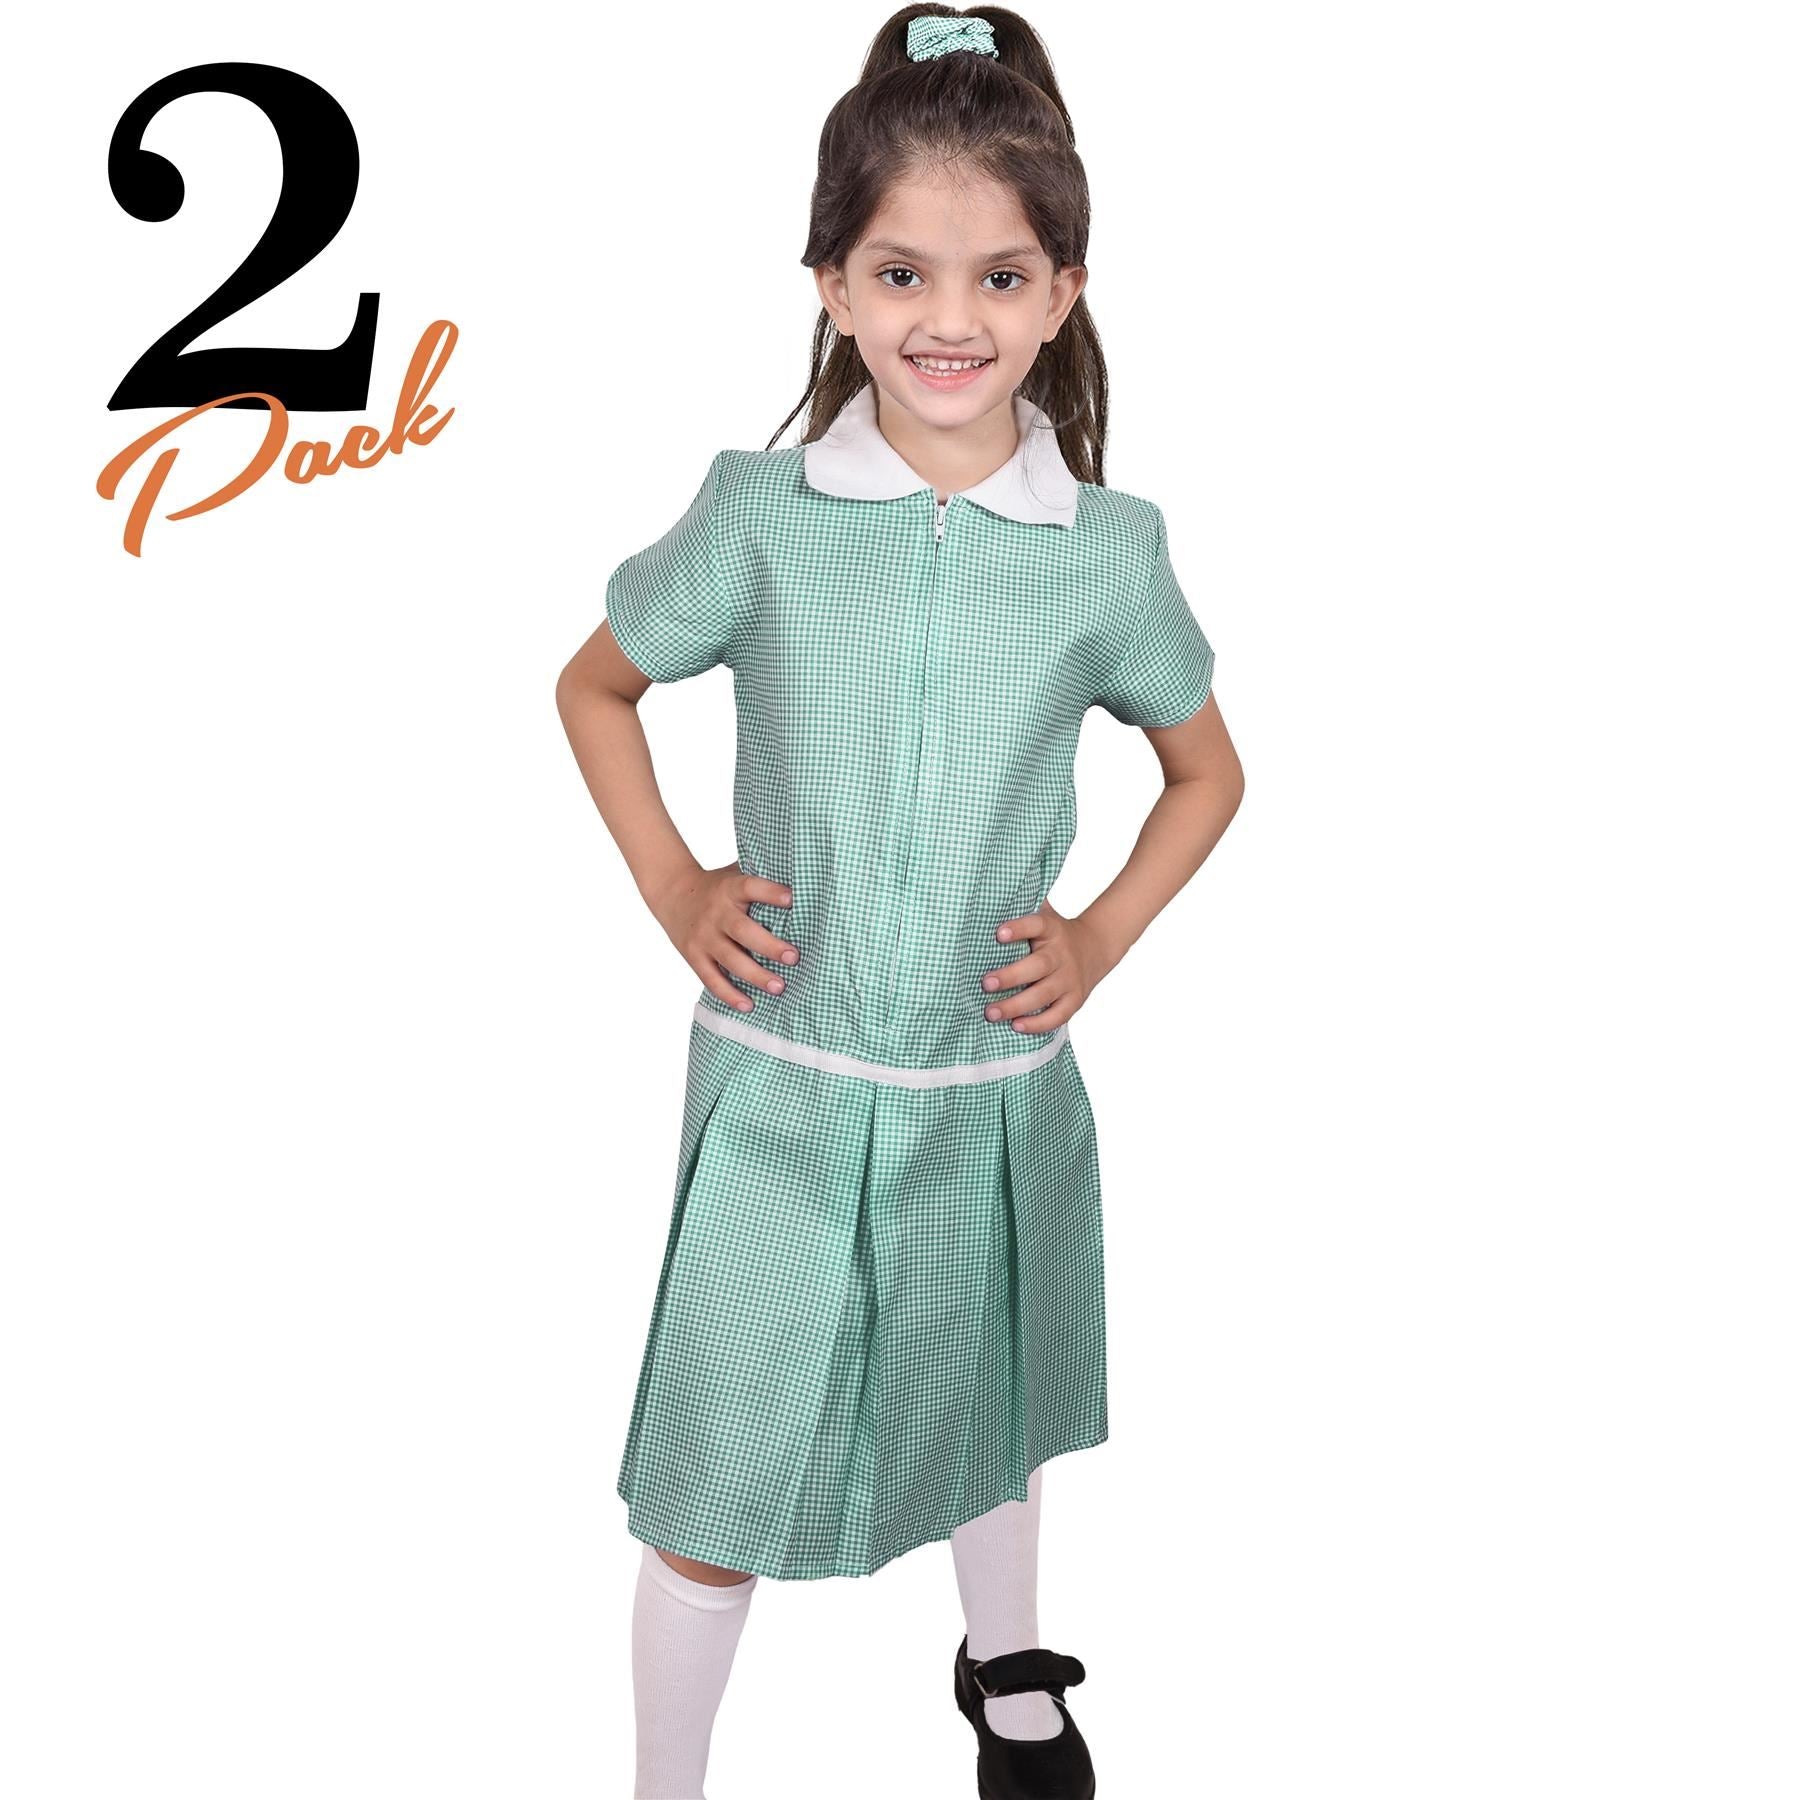 Kids Girls 2 Pack Uniform School Zip Up Gingham Dress With Matching Scrunchies